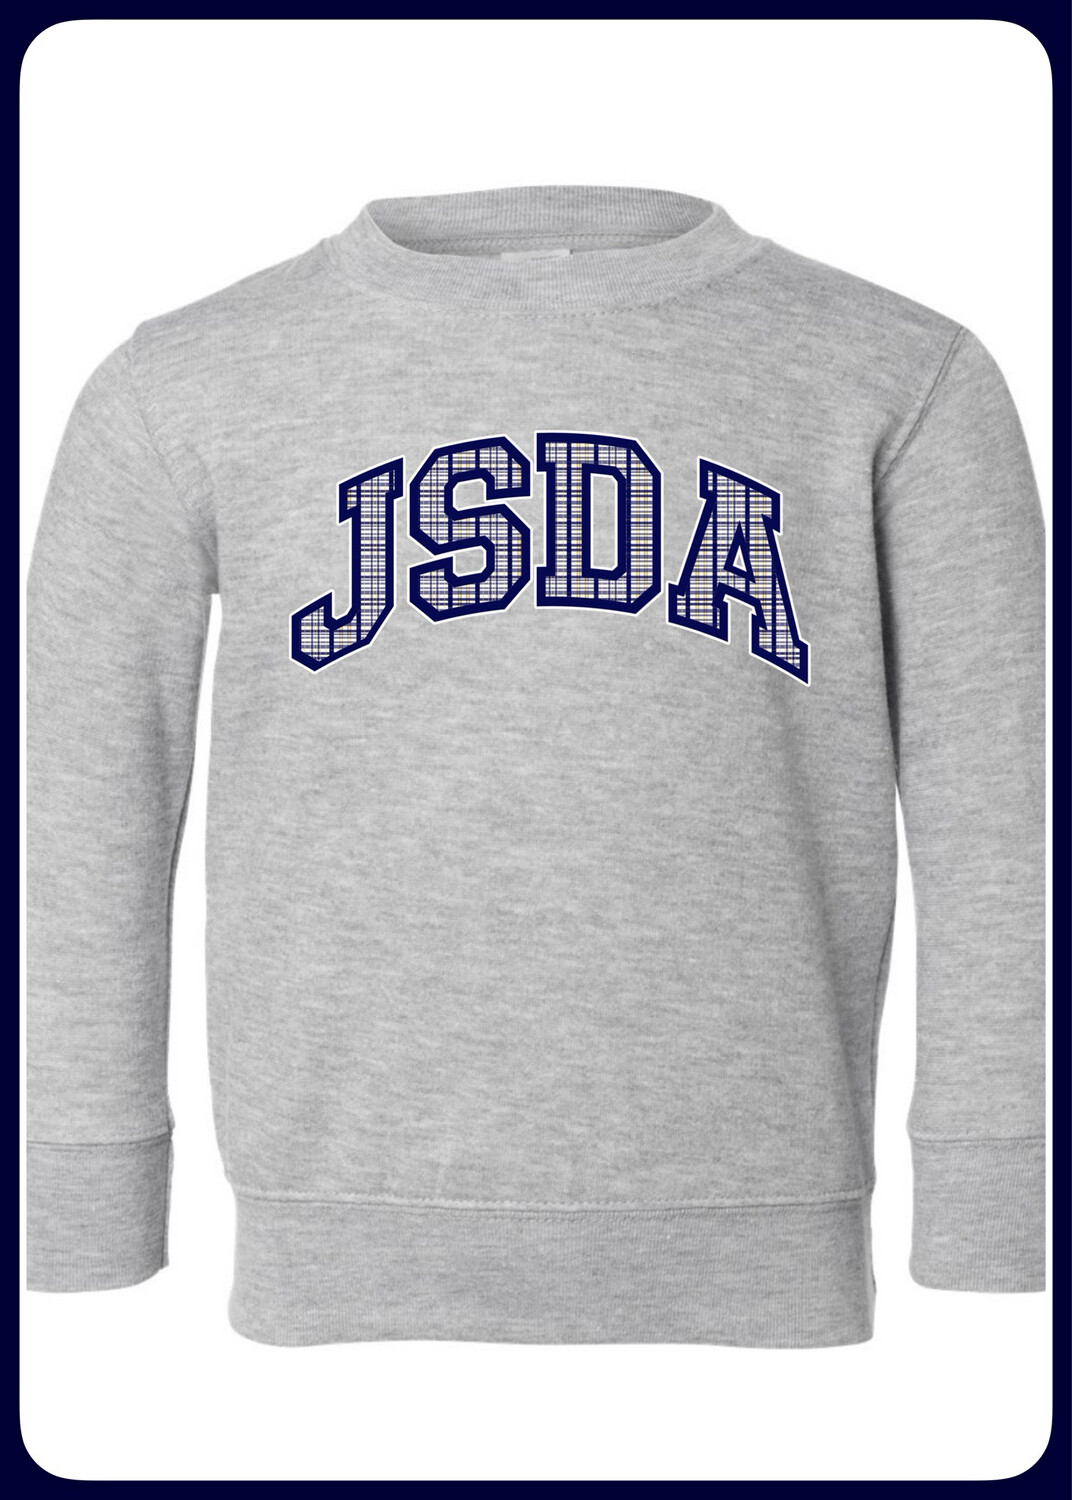 JSDA ash gray Crew Neck Sweatshirt Adult- Youth-Toddler